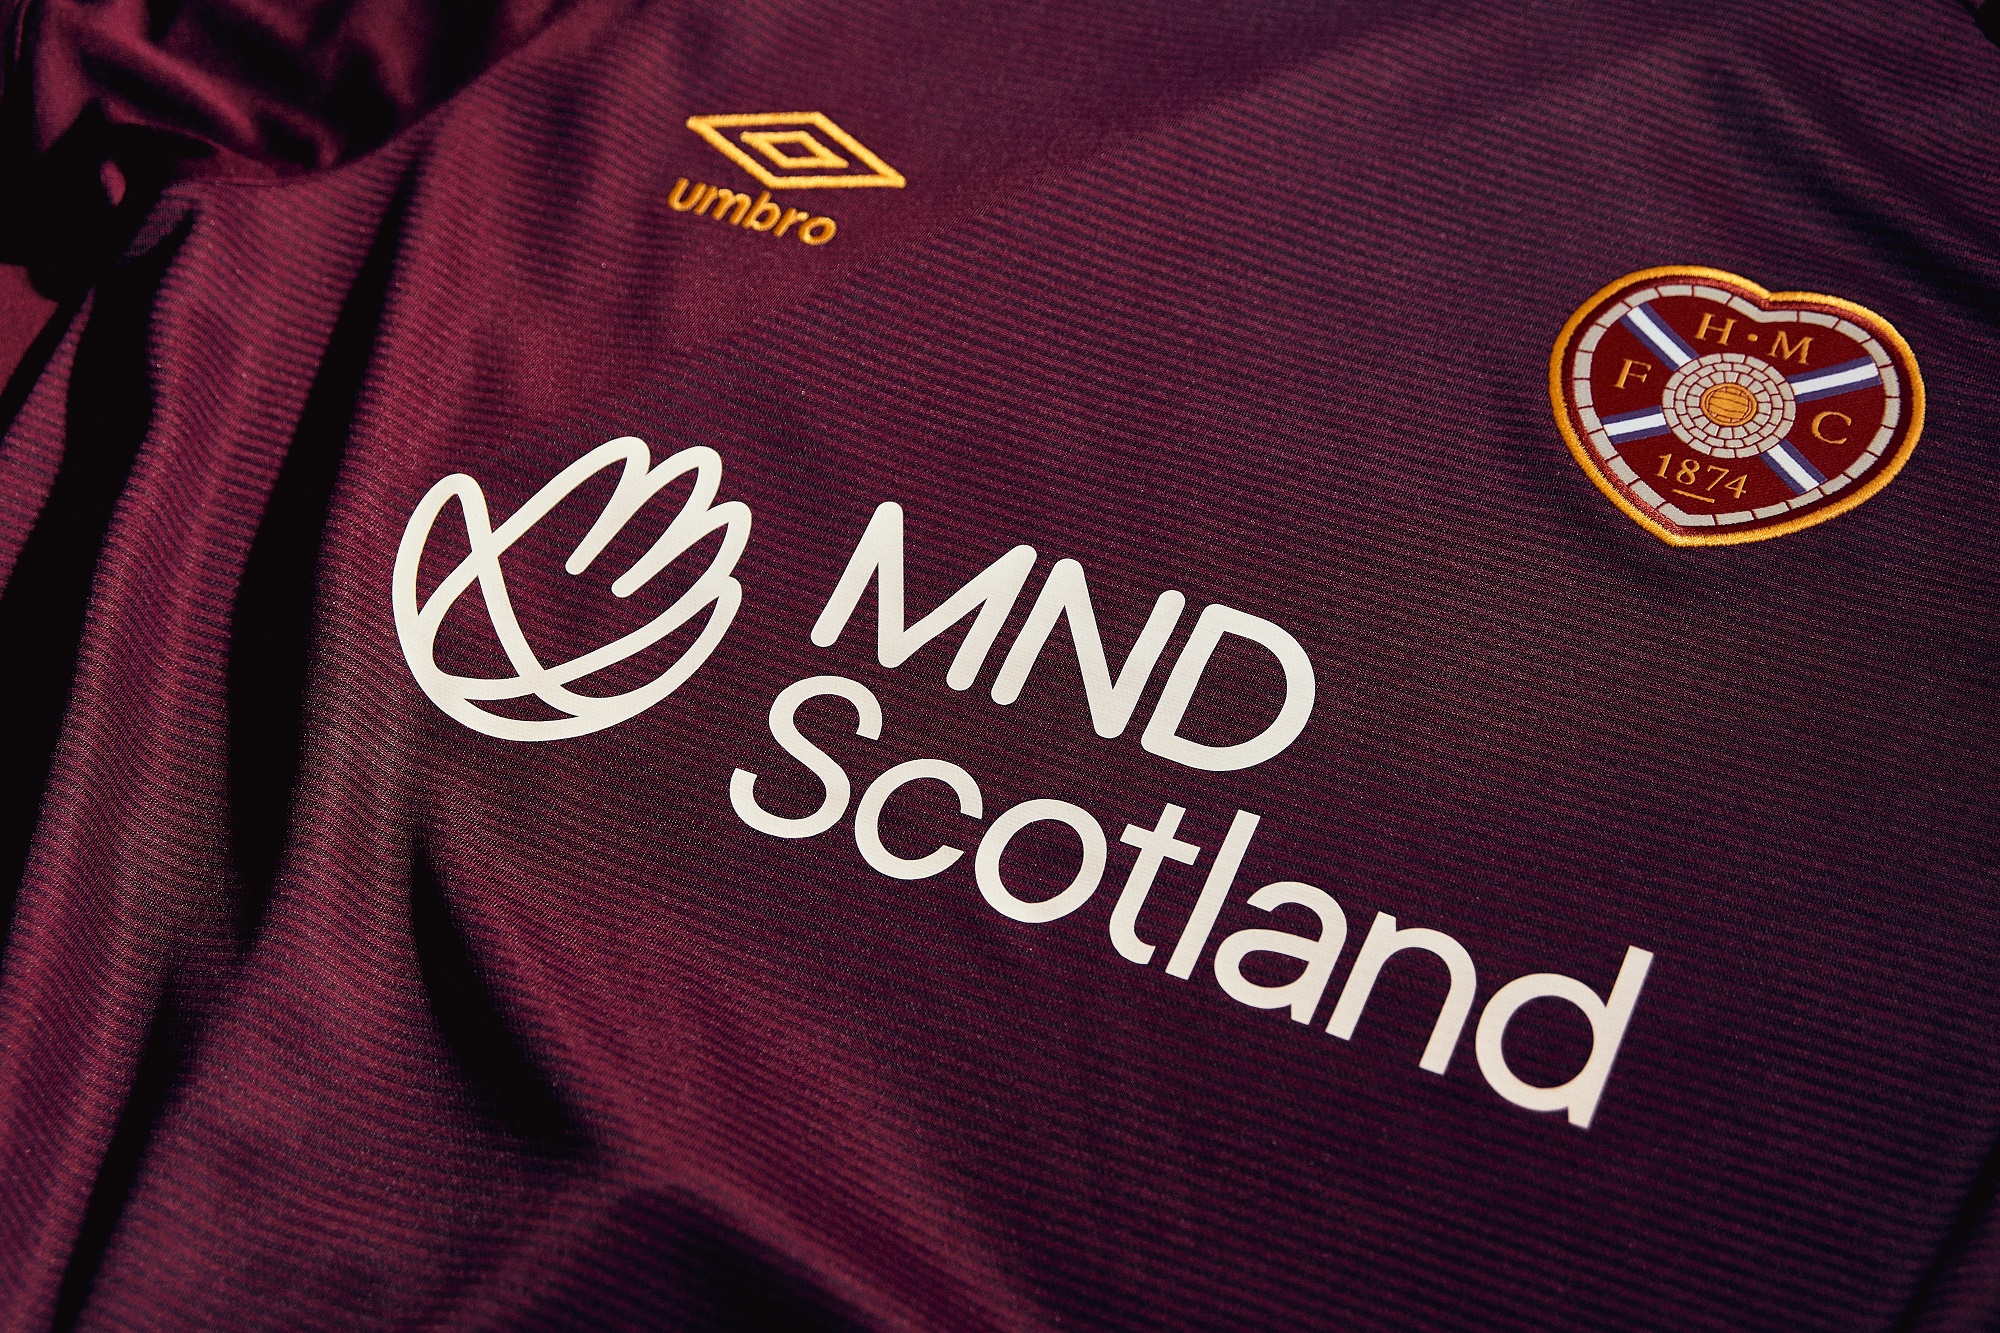 MND Scotland's new logo on Hearts home jersey - MND Scotland